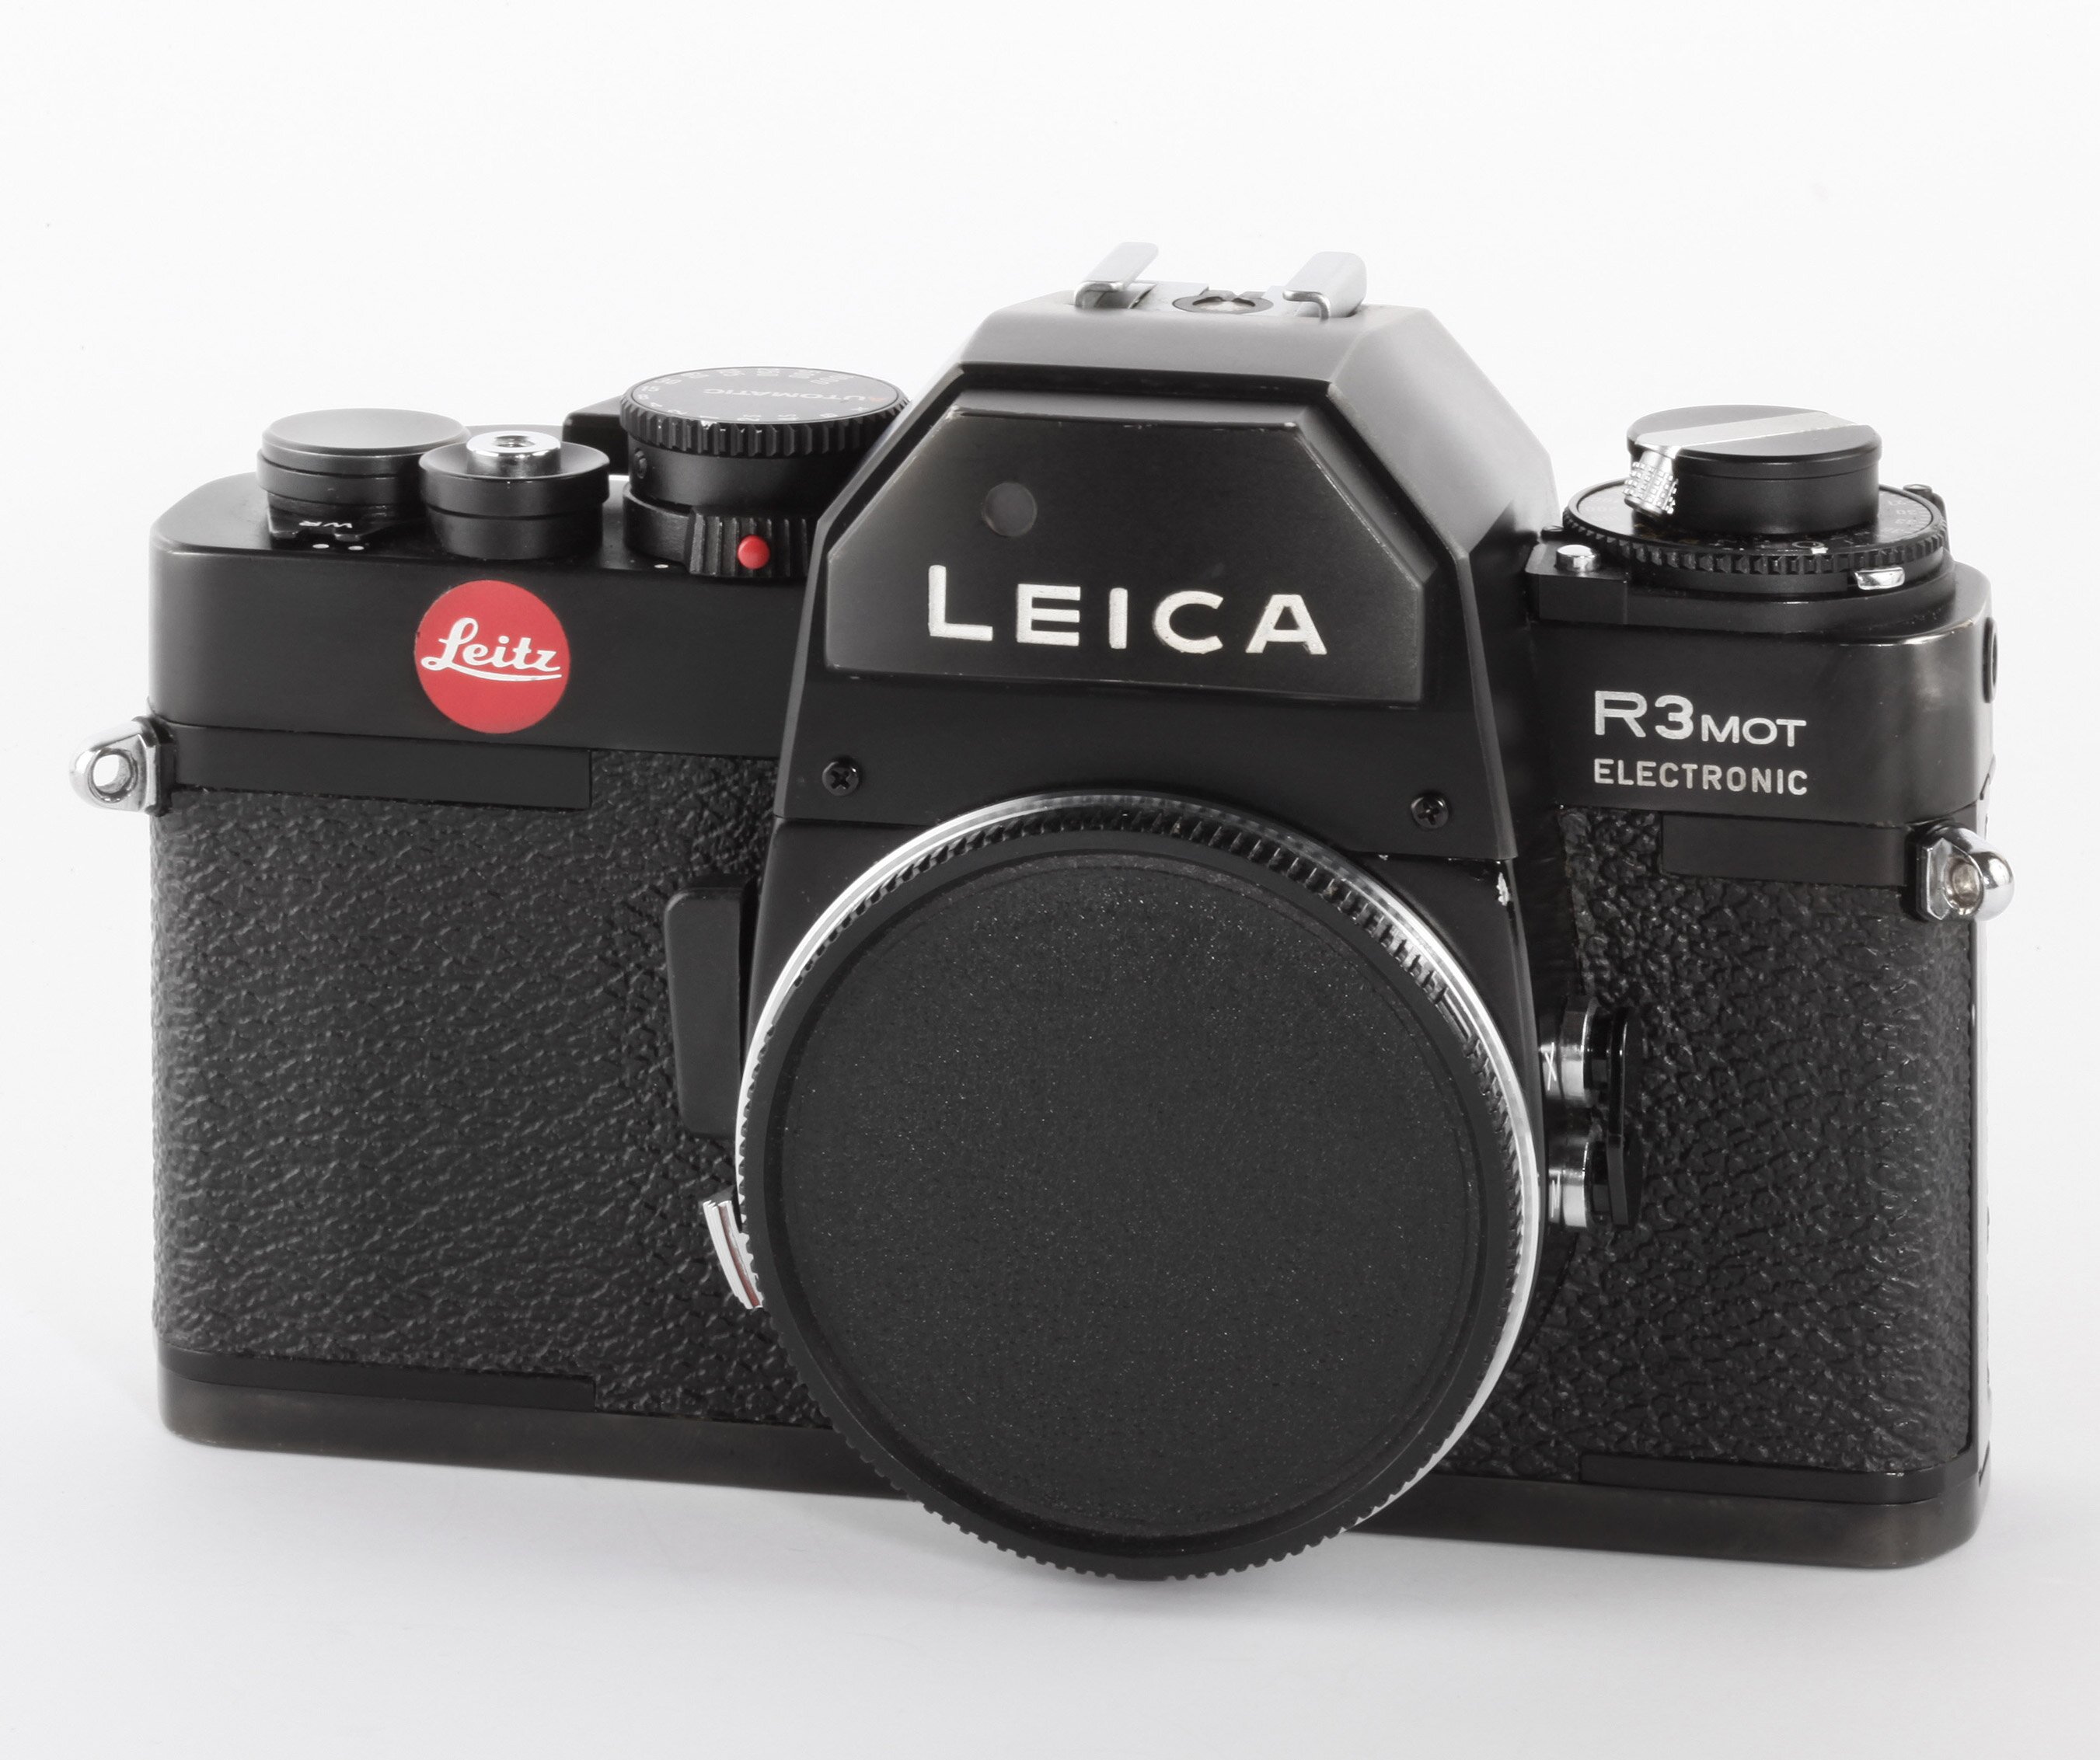 Leica R3 MOT electronic